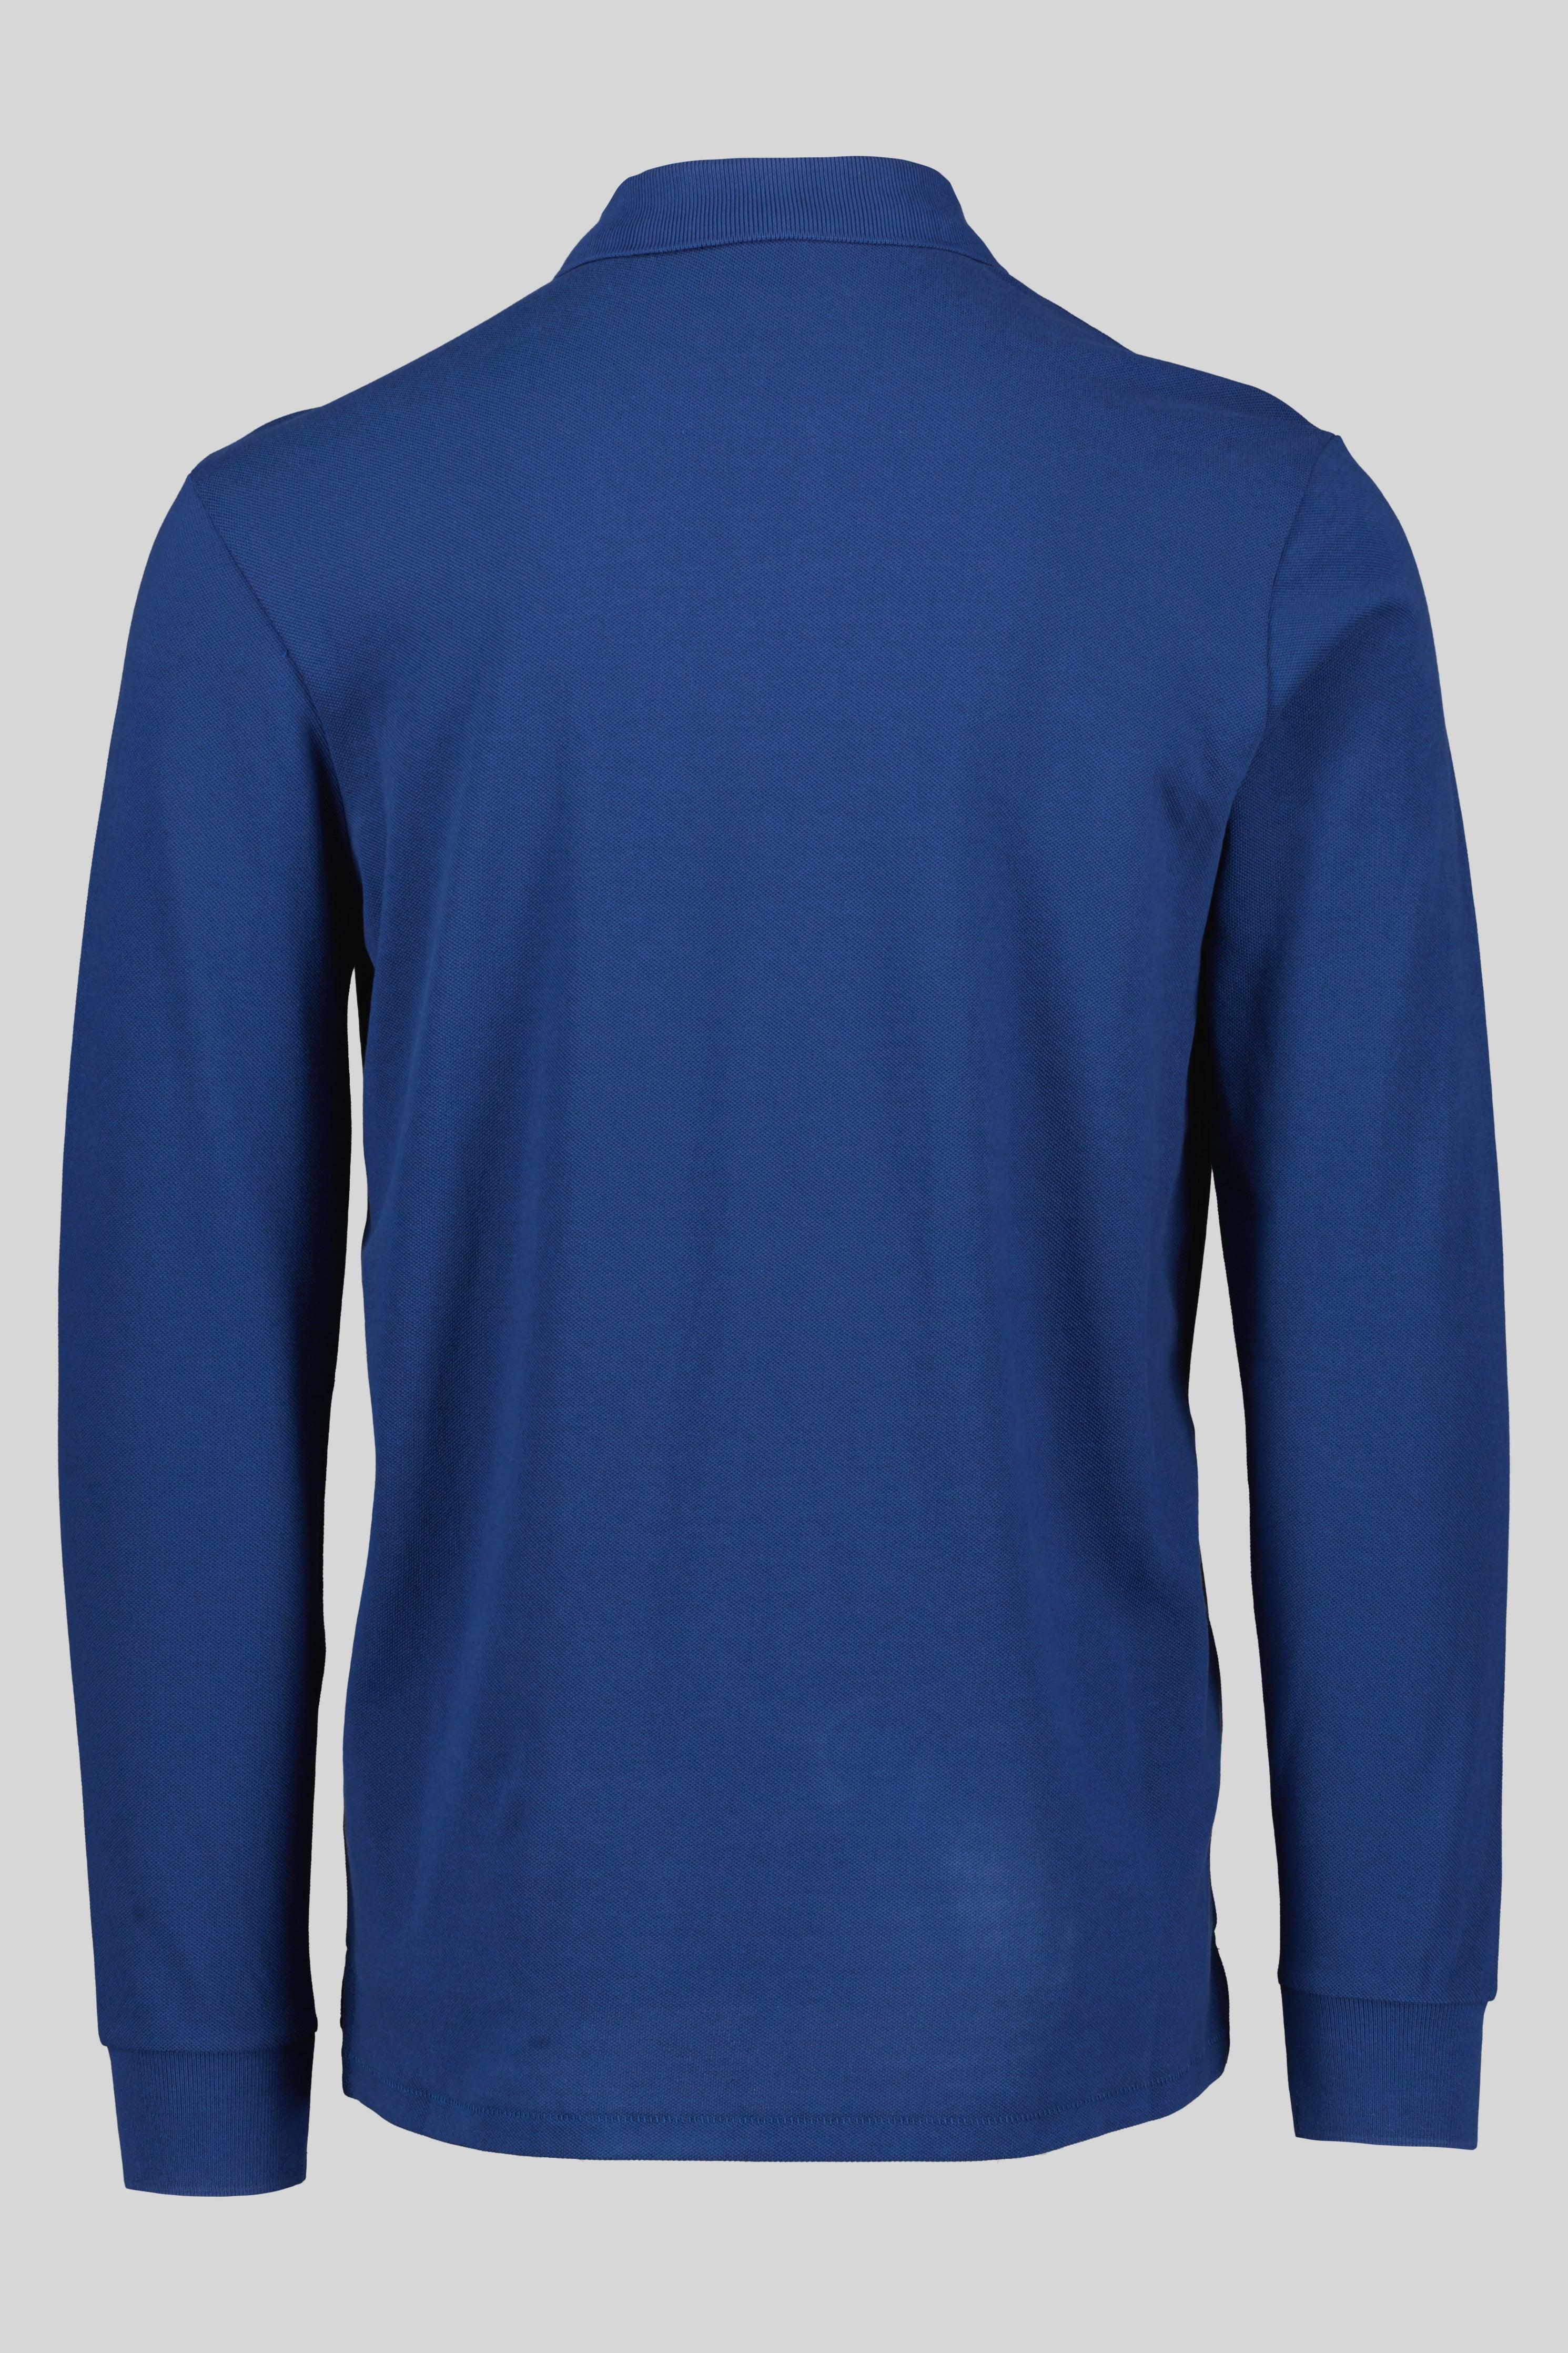 Paul Smith Cotton Men's Cobalt Blue Regular Fit Zebra Long Sleeve Polo Shirt  for Men - Save 2% | Lyst